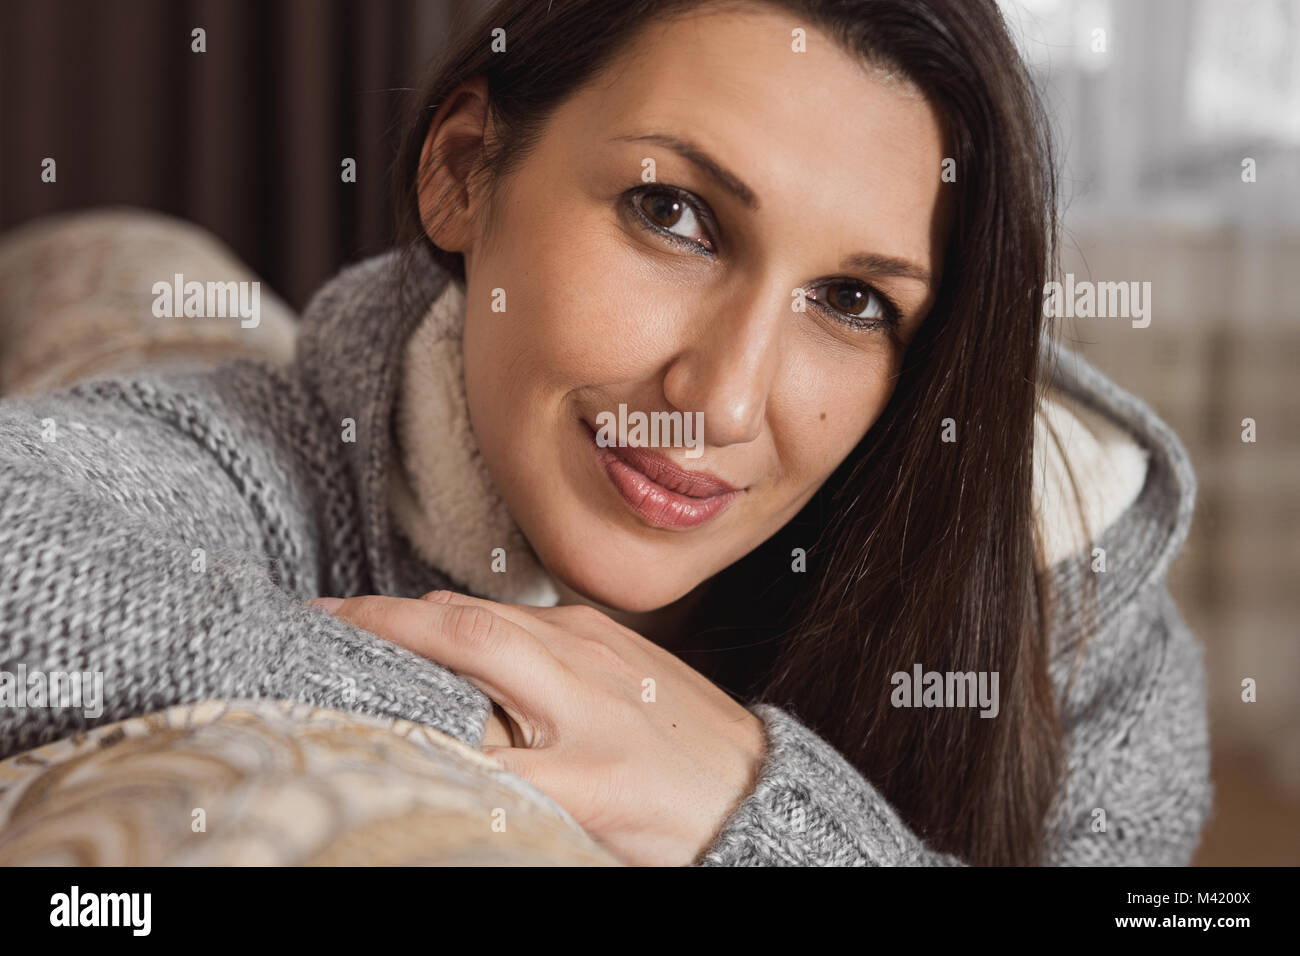 Portrait of a beautiful smiling woman closeup Stock Photo